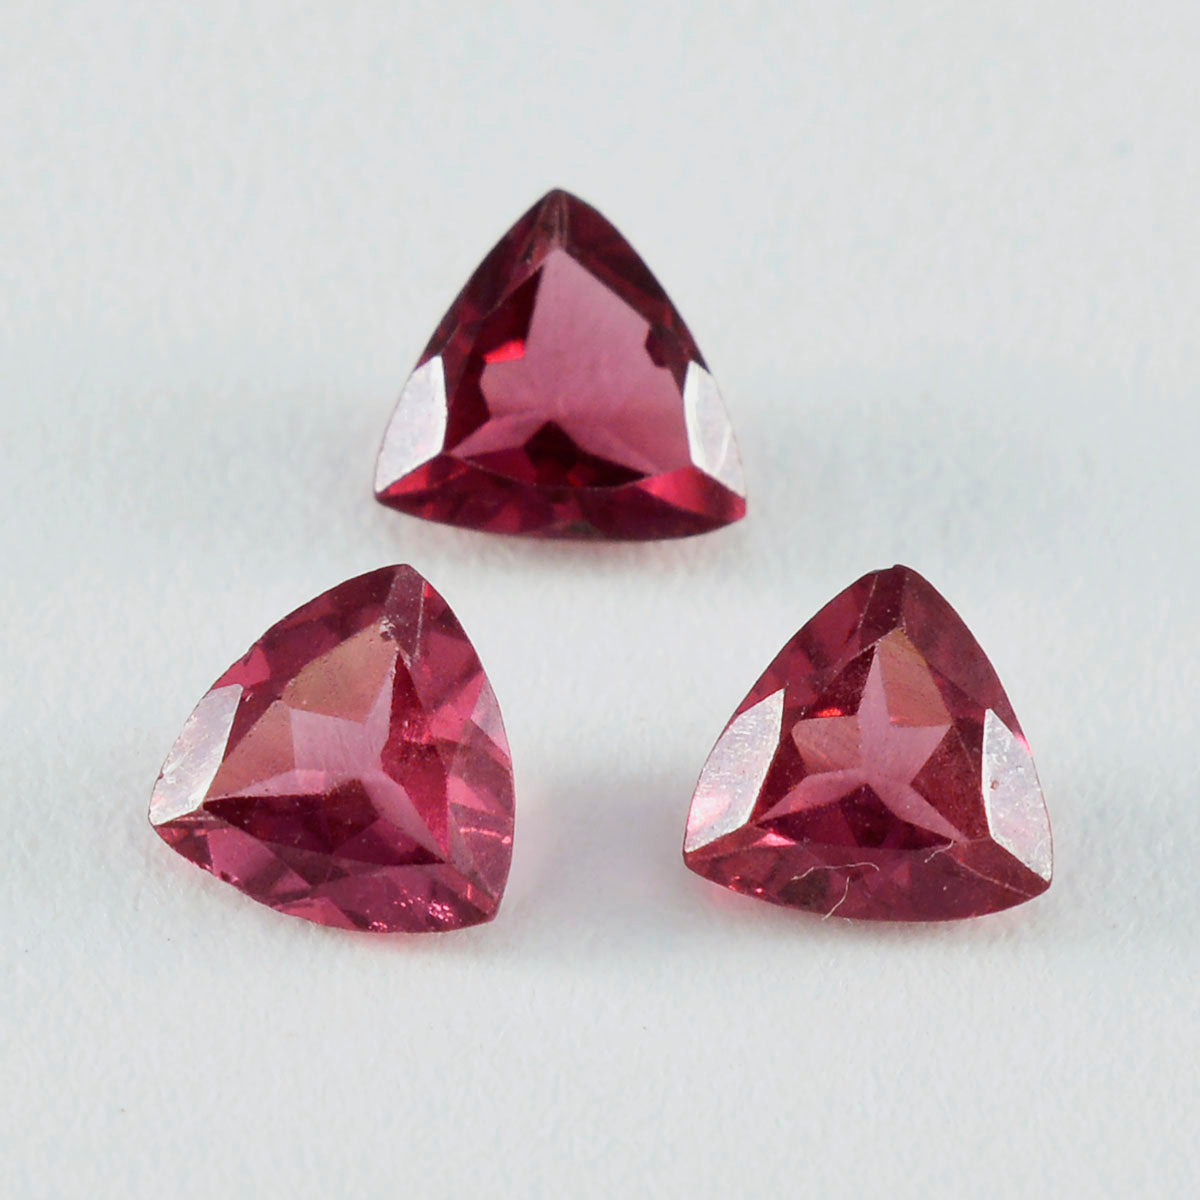 Riyogems 1PC Genuine Red Garnet Faceted 13x13 mm Trillion Shape beauty Quality Gemstone